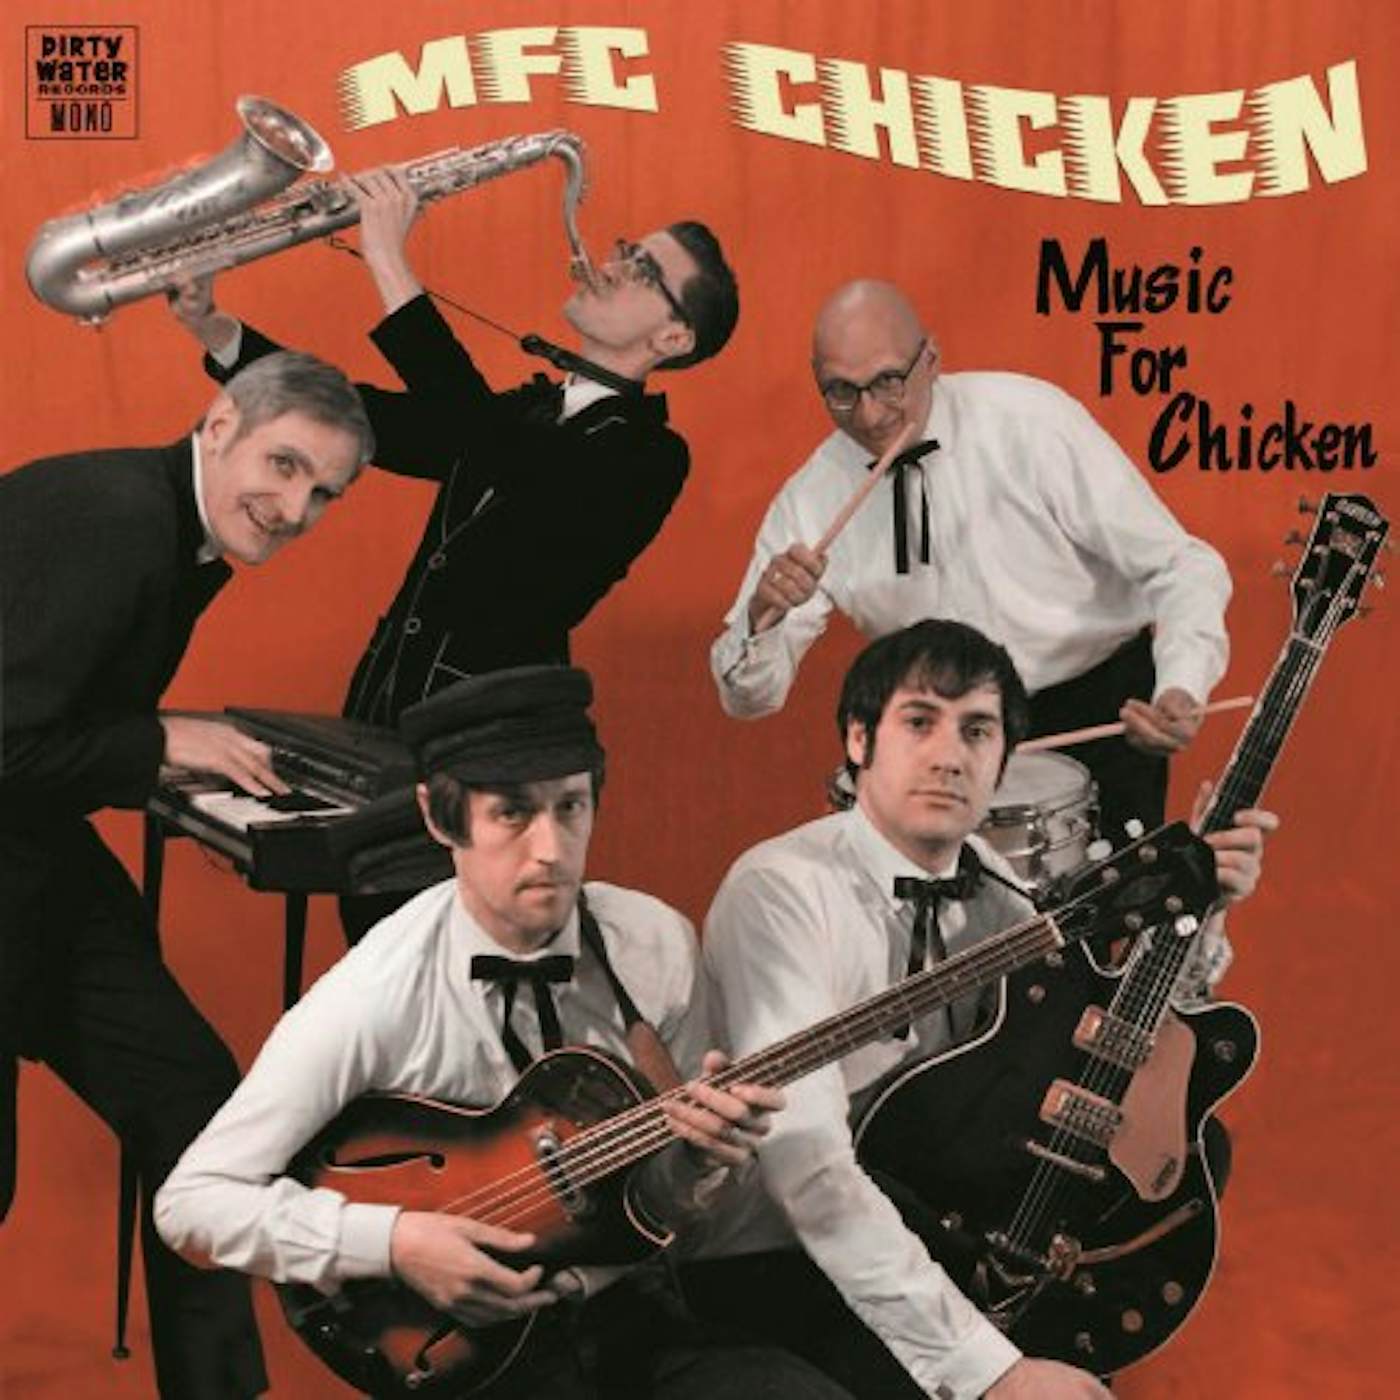 MFC CHICKEN Vinyl Record